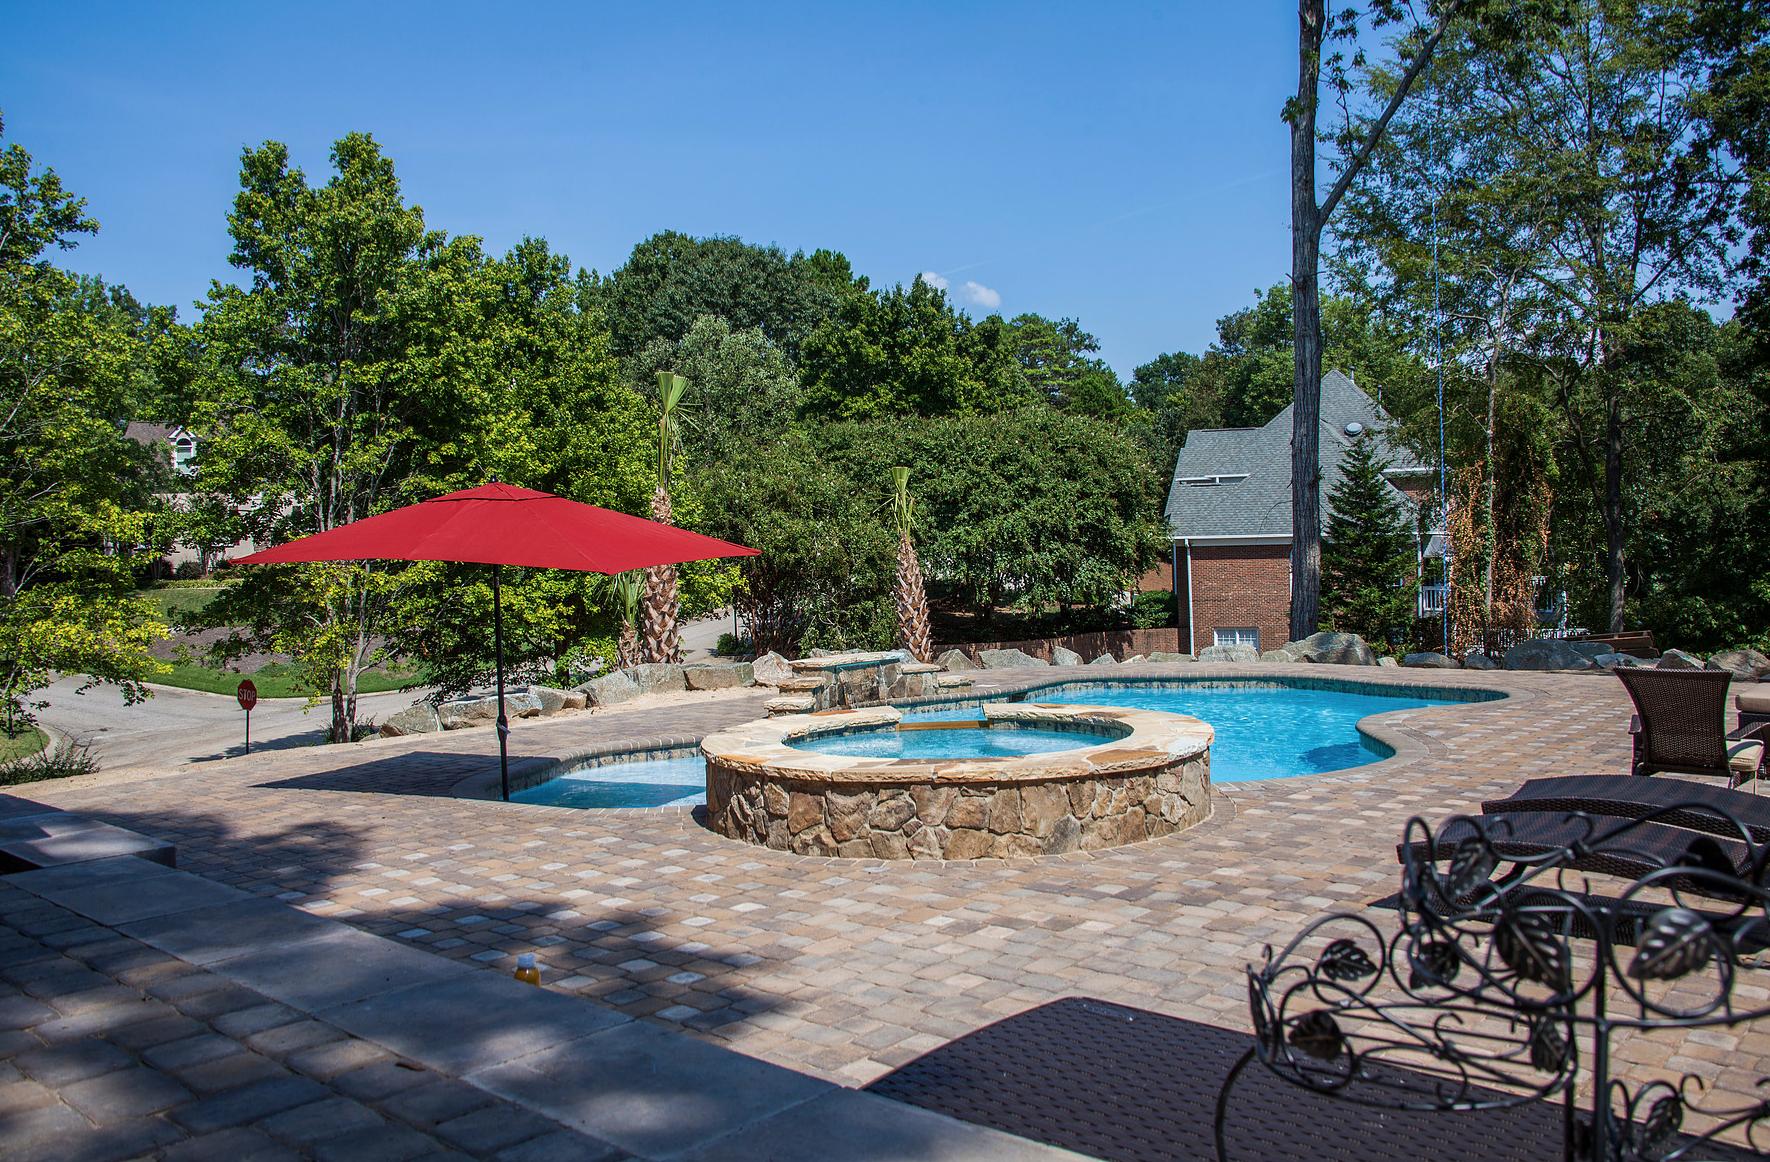 CPC Pools Offers Huntersville North Carolina Custom Concrete Pool Installation Call us 704-799-5236